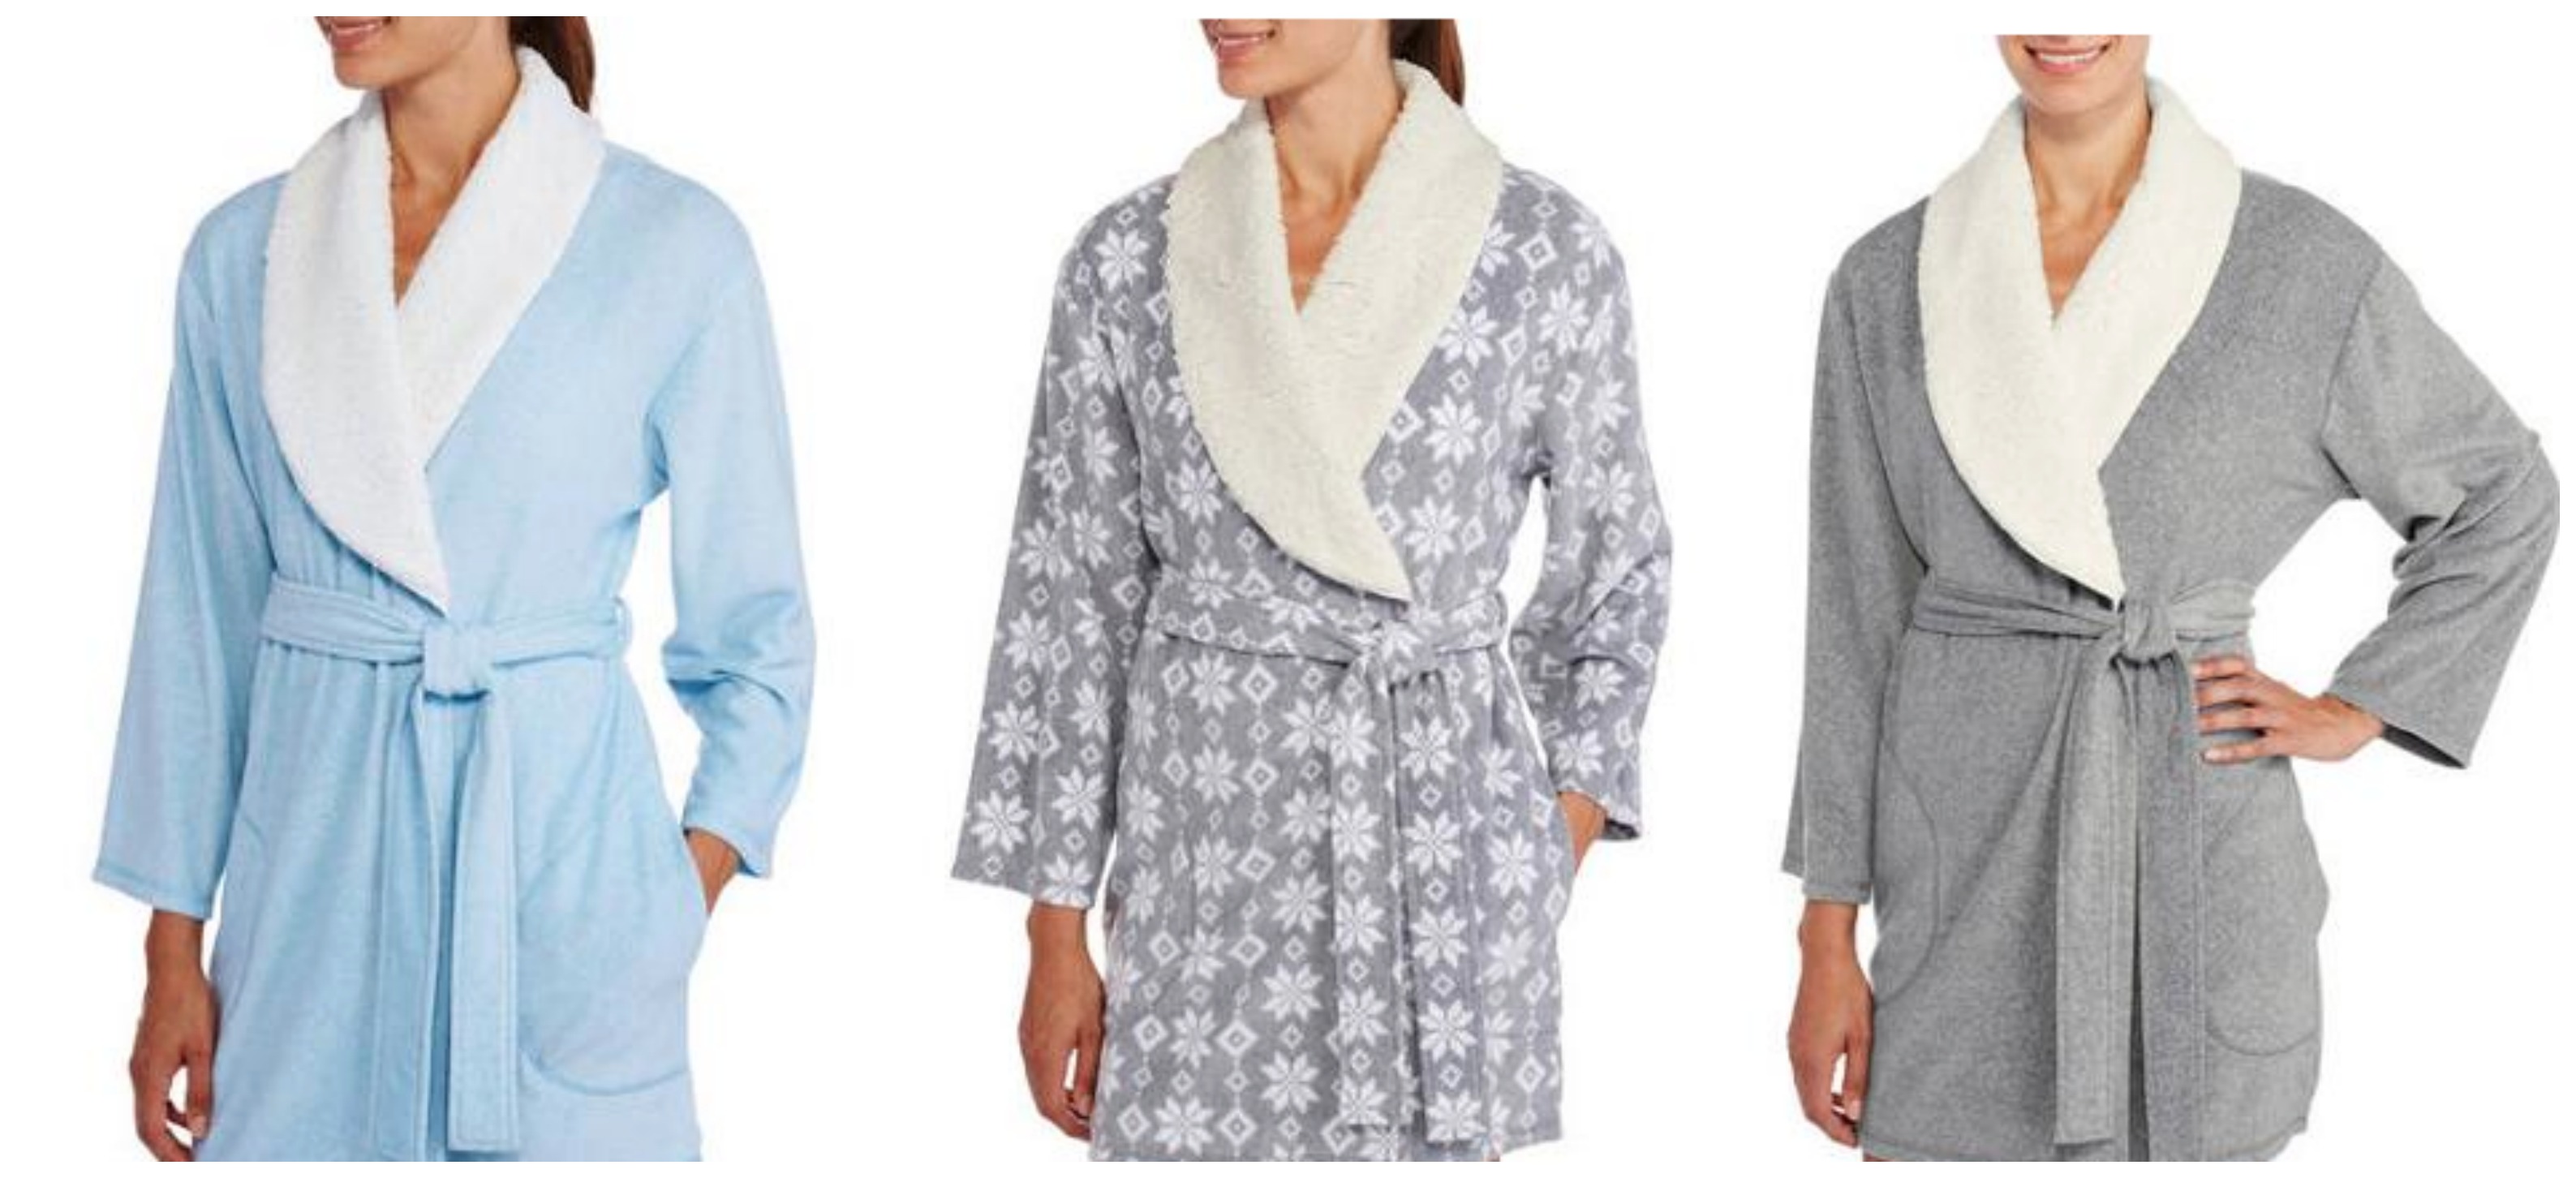 Robes for girls walmart